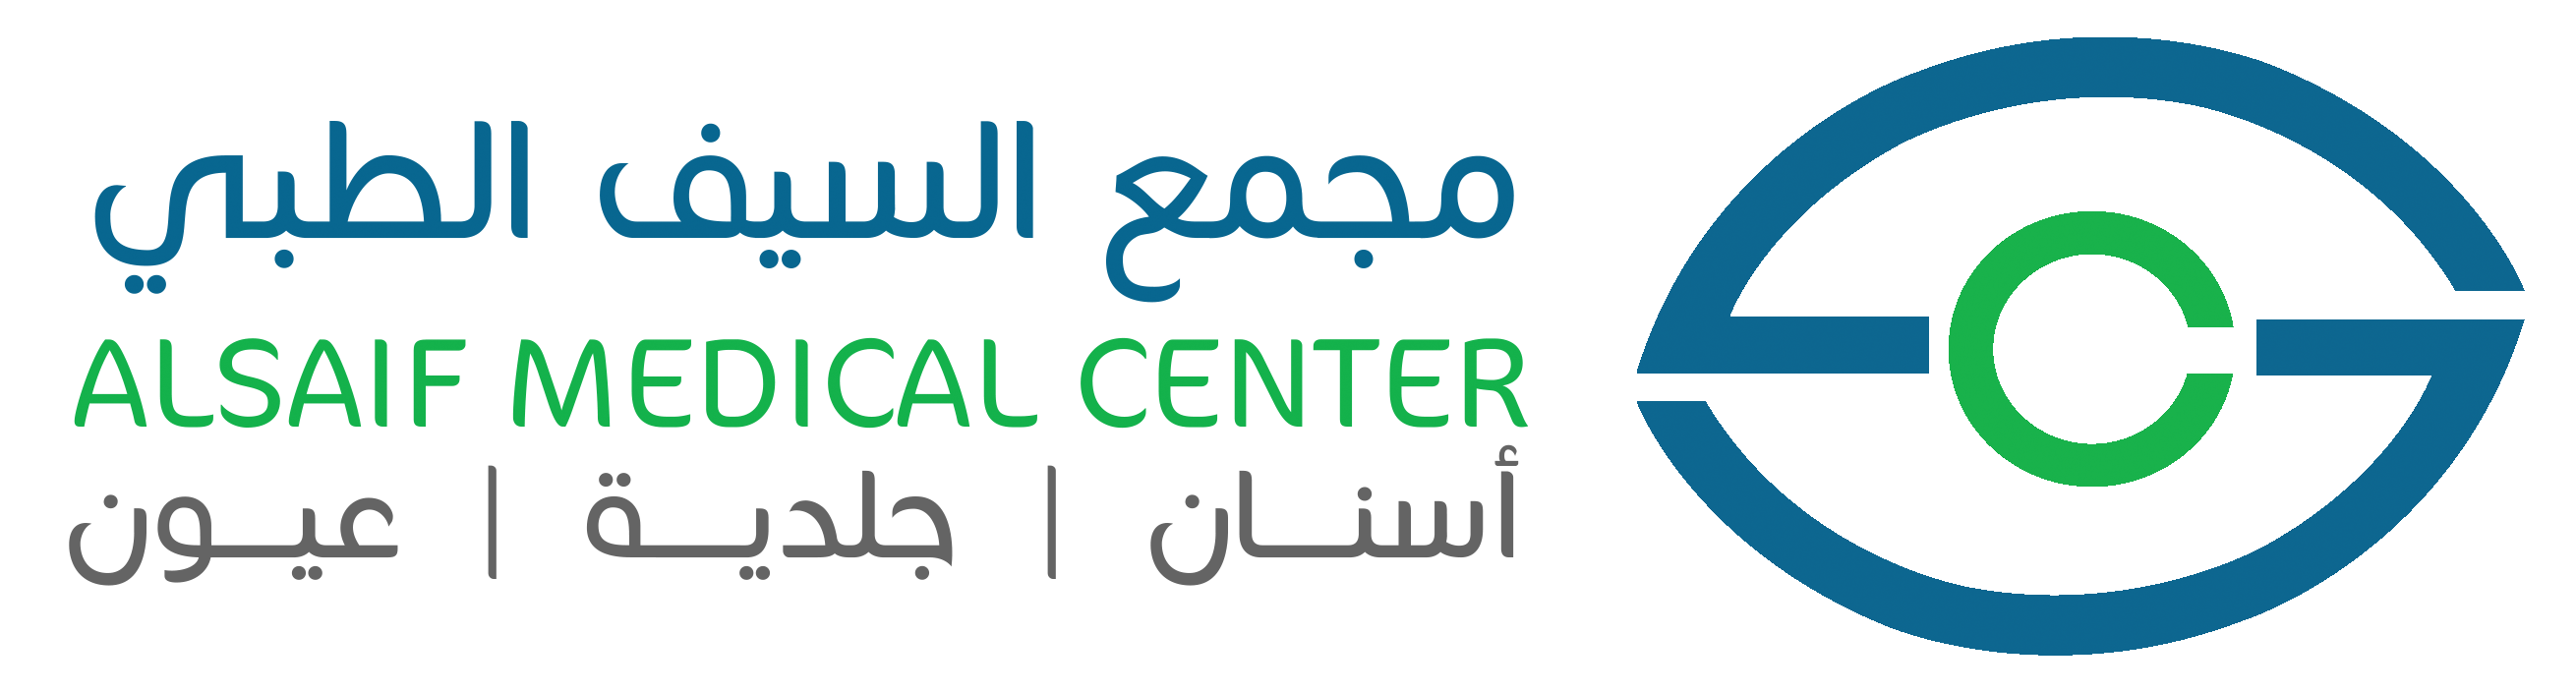 Alsaif Medical Center Logo